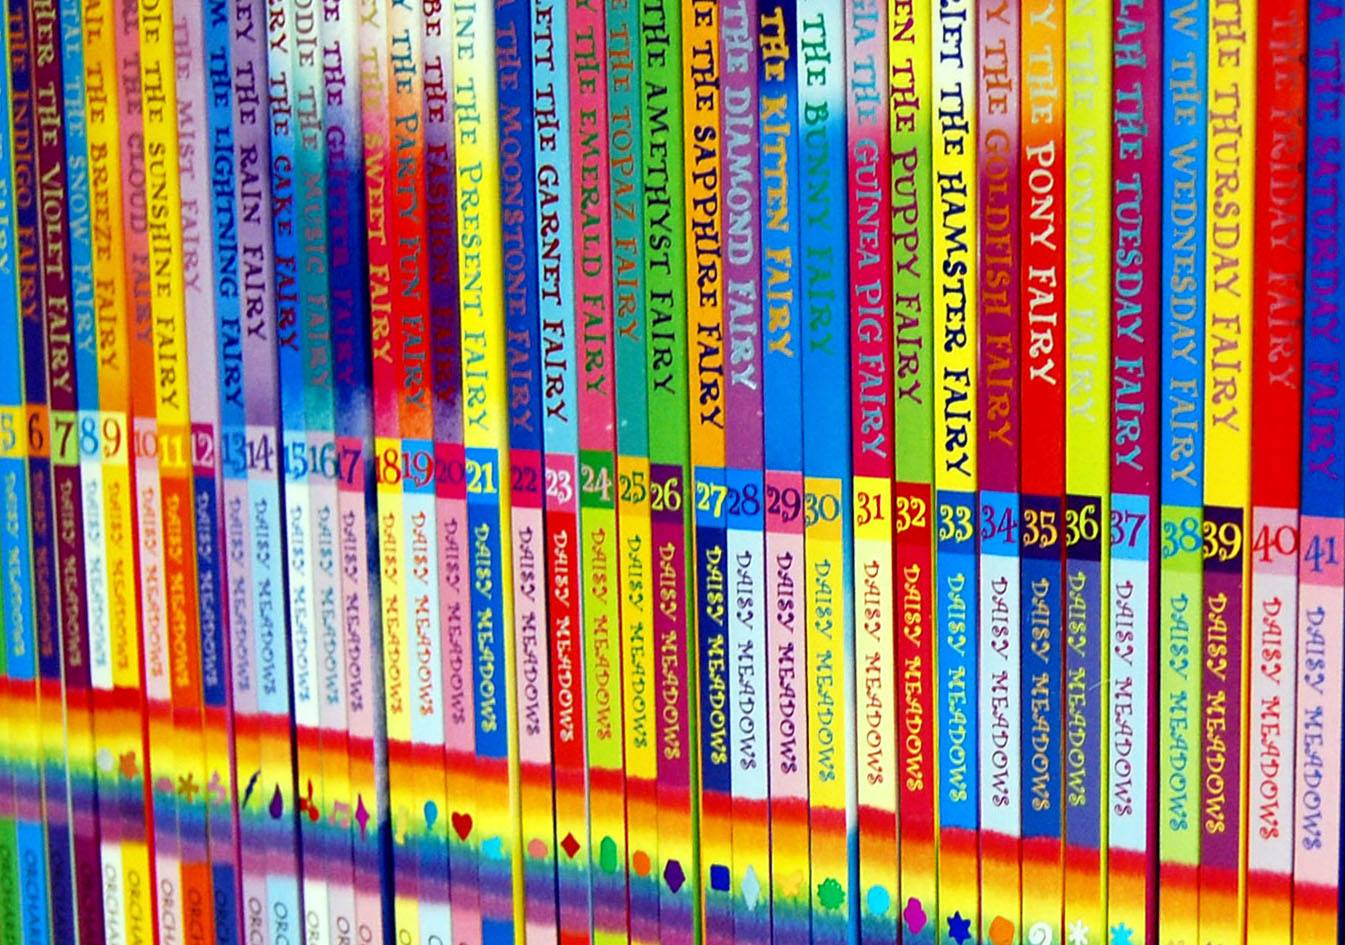 childrens-book-series-image-rainbow-magic